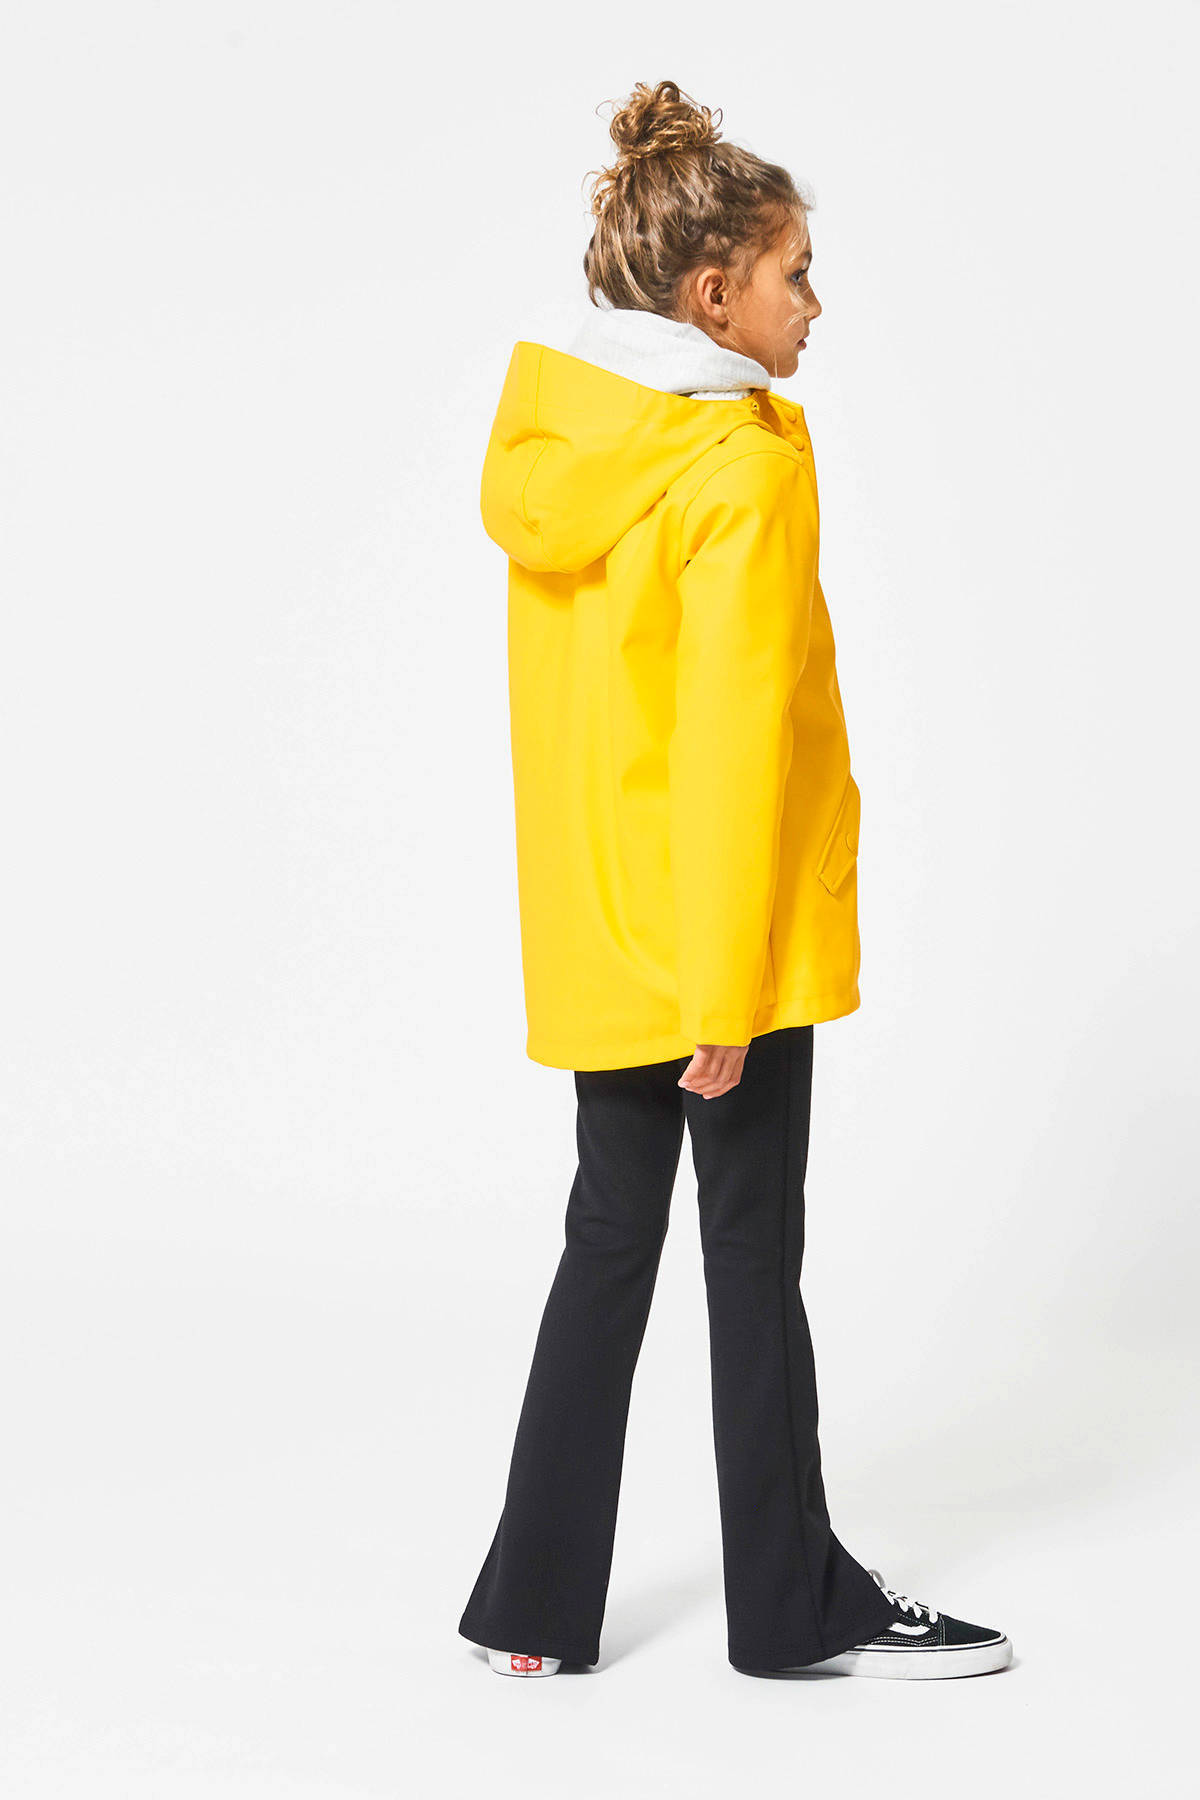 & Badmode Regenkleding wehkamp Sport Unisex gevoerde regenjas geel 